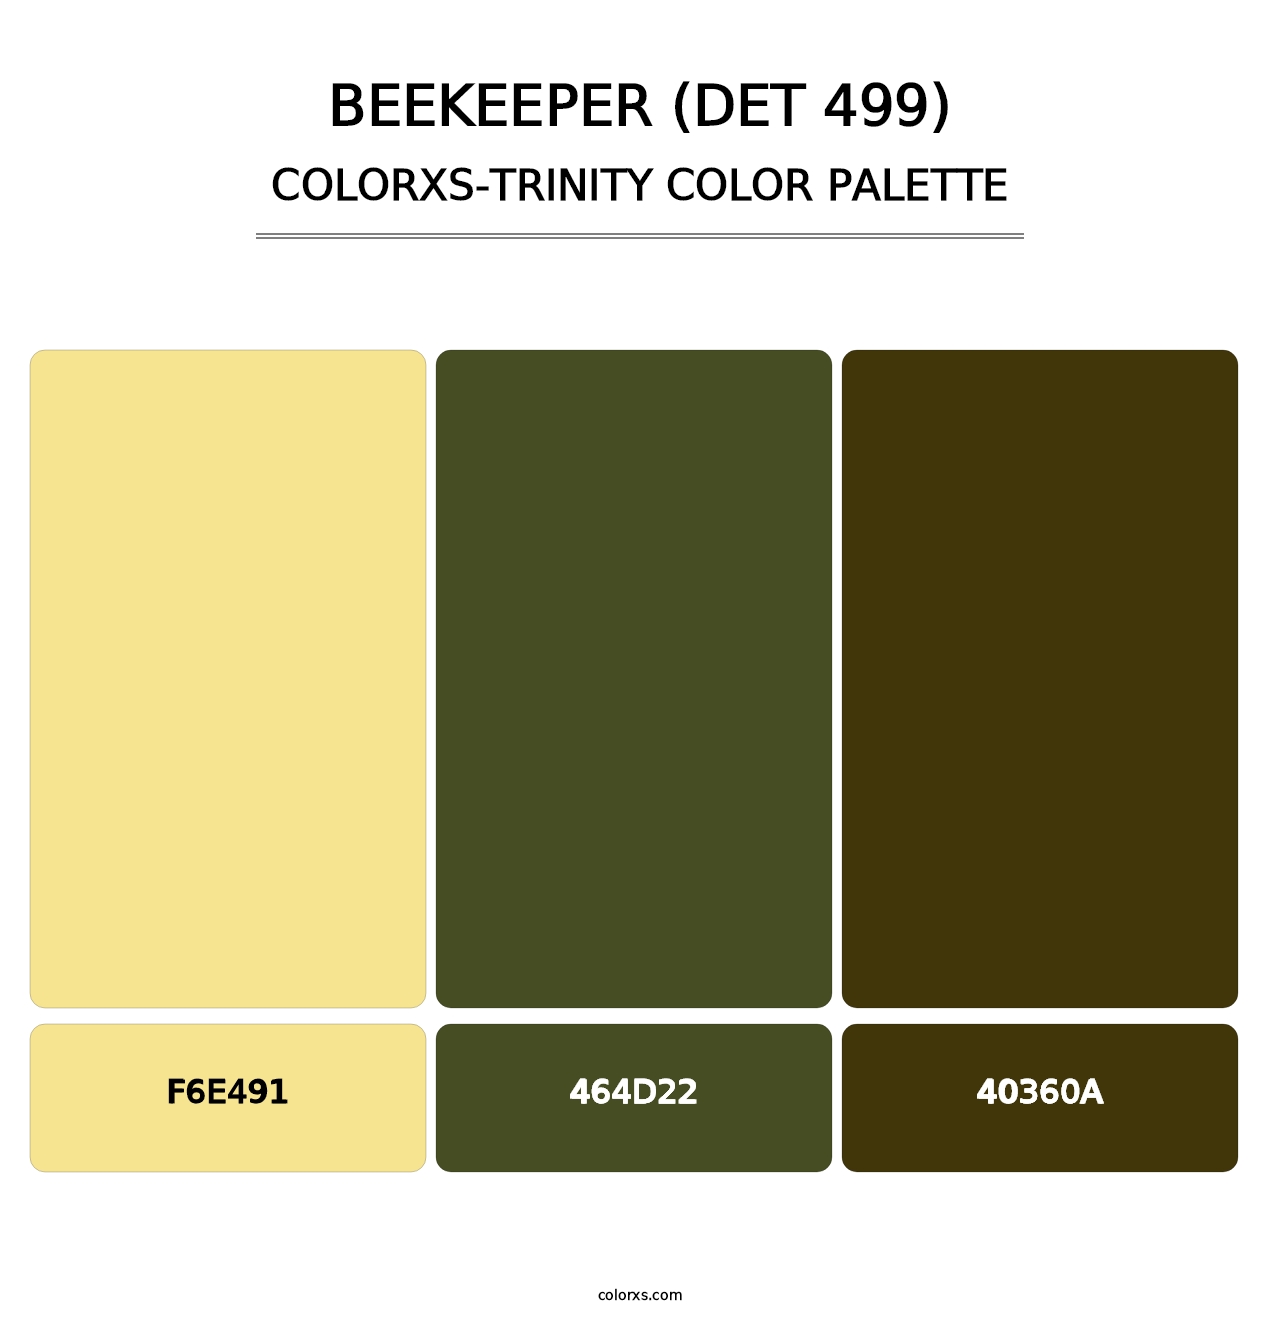 Beekeeper (DET 499) - Colorxs Trinity Palette